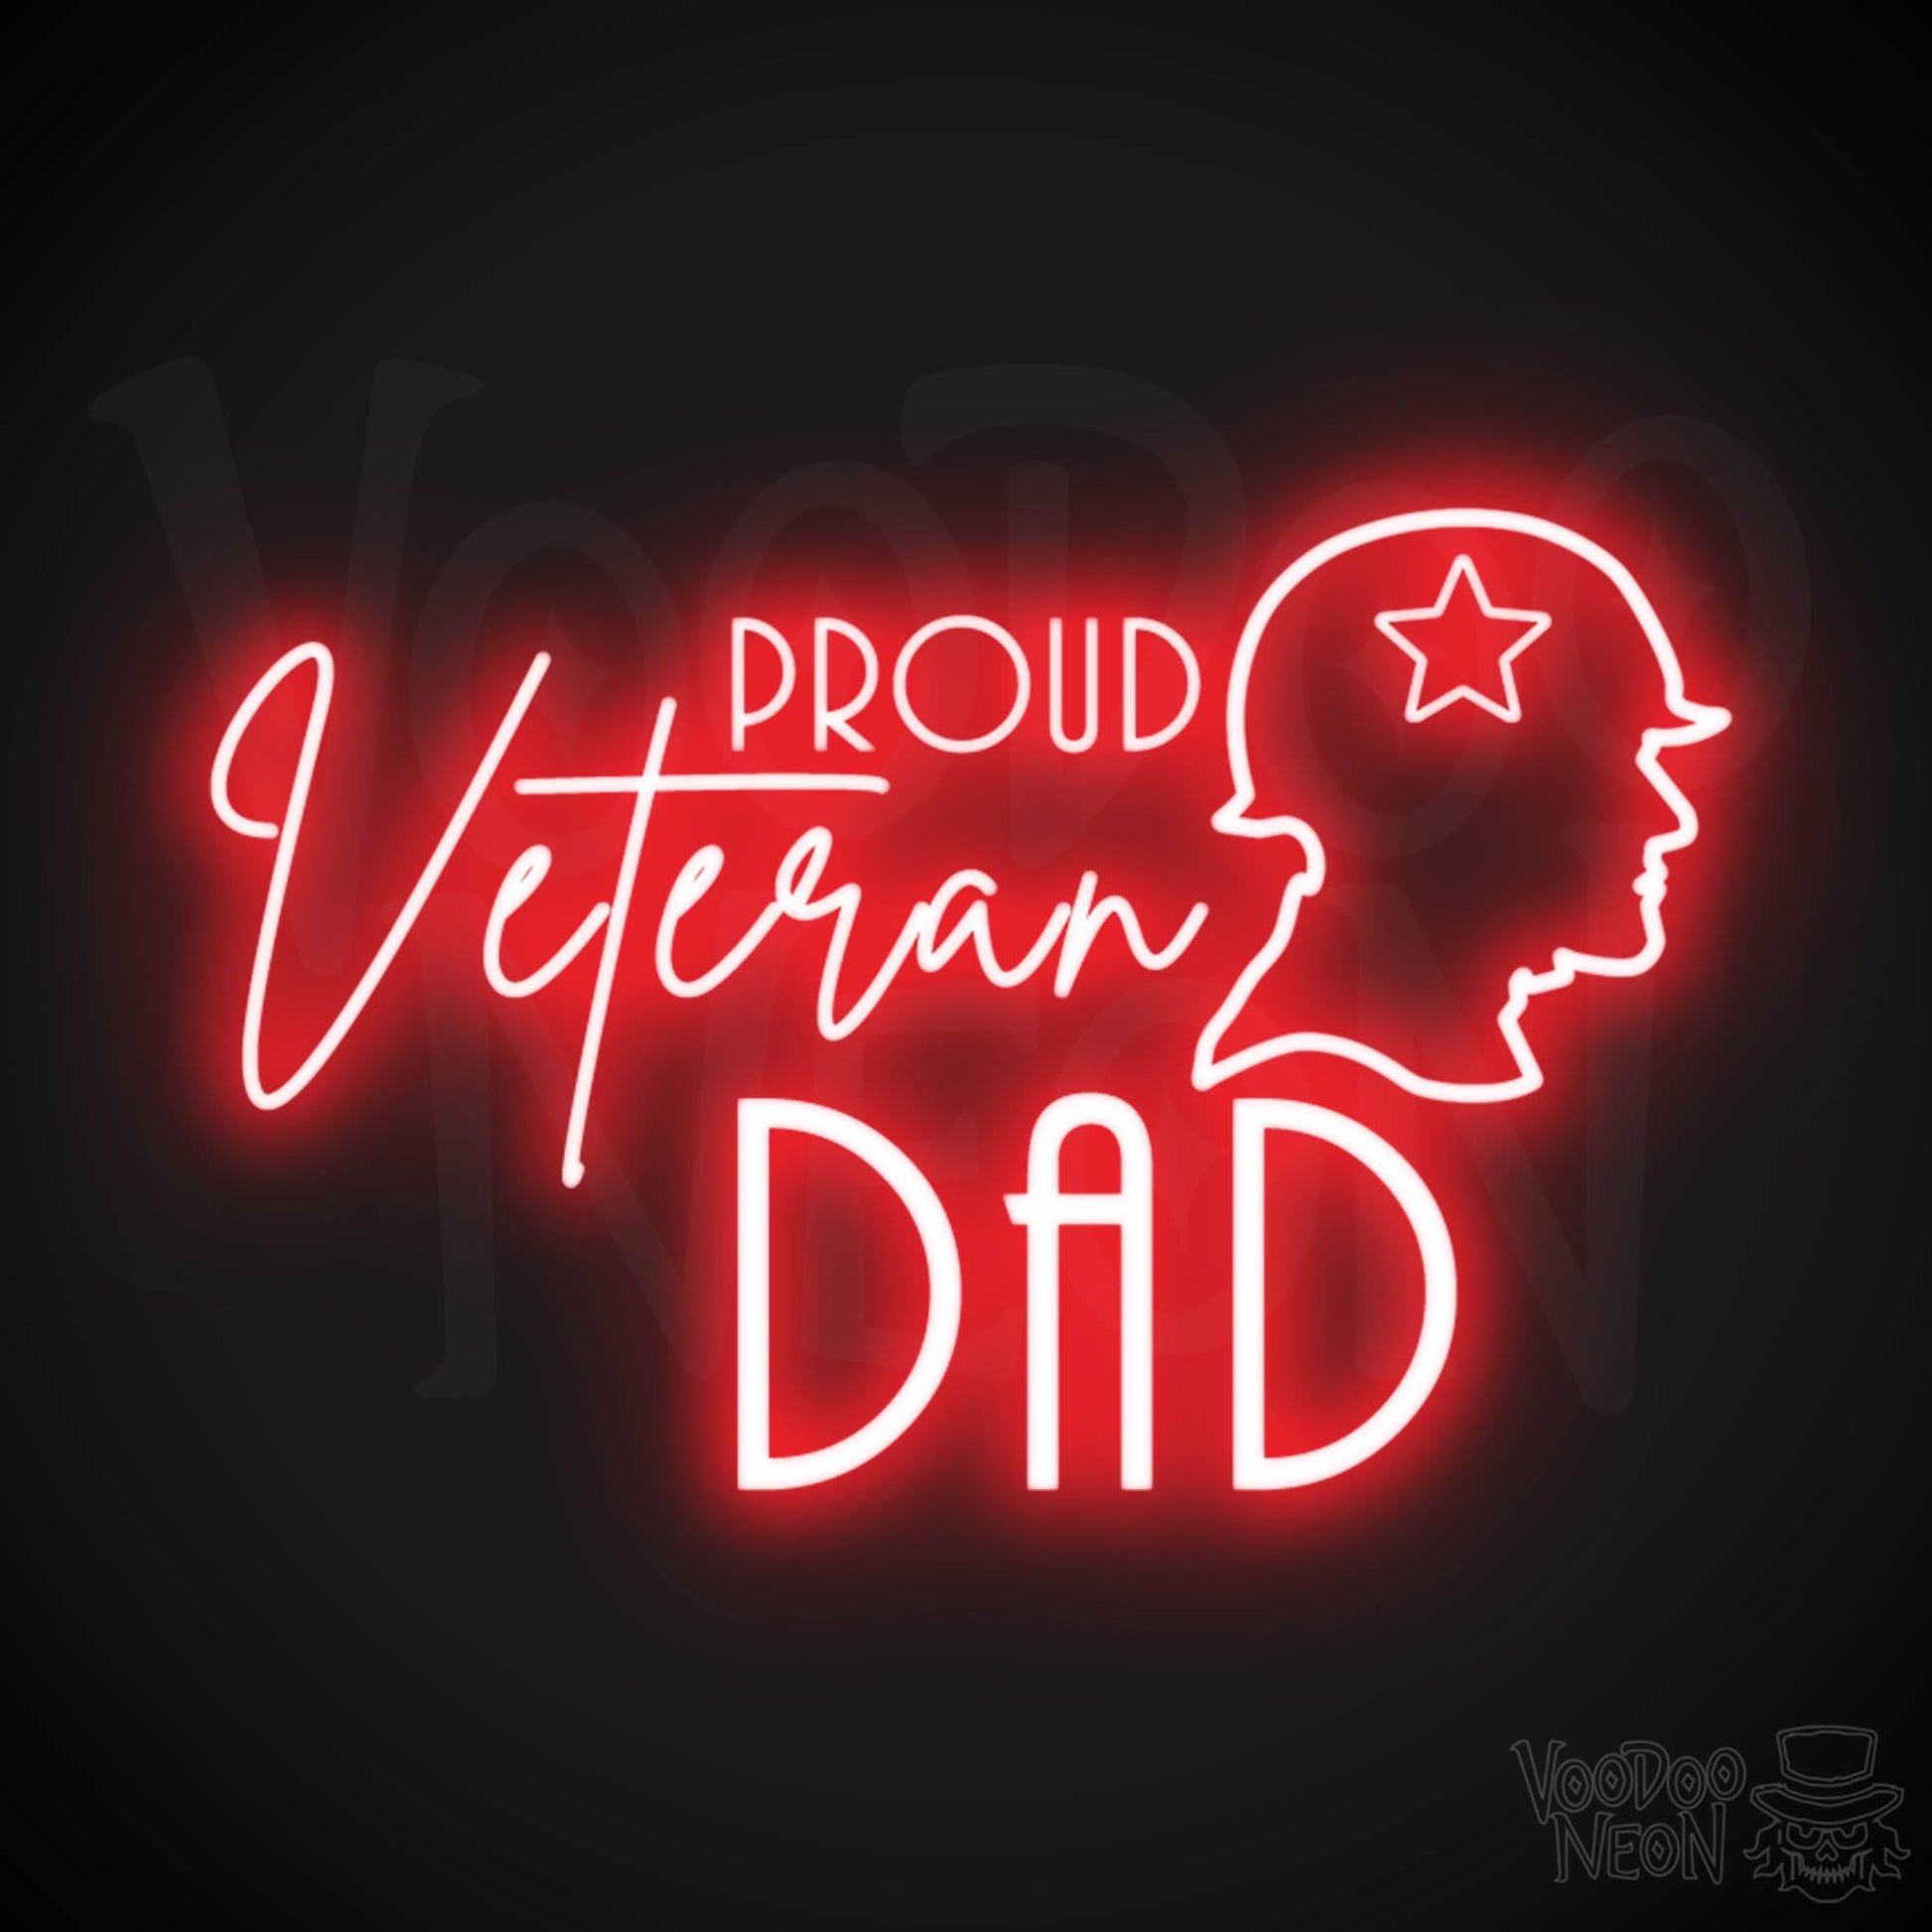 Proud Veteran Dad Neon Sign - Proud Veteran Dad Sign - Neon Veteran Wall Art - Color Red